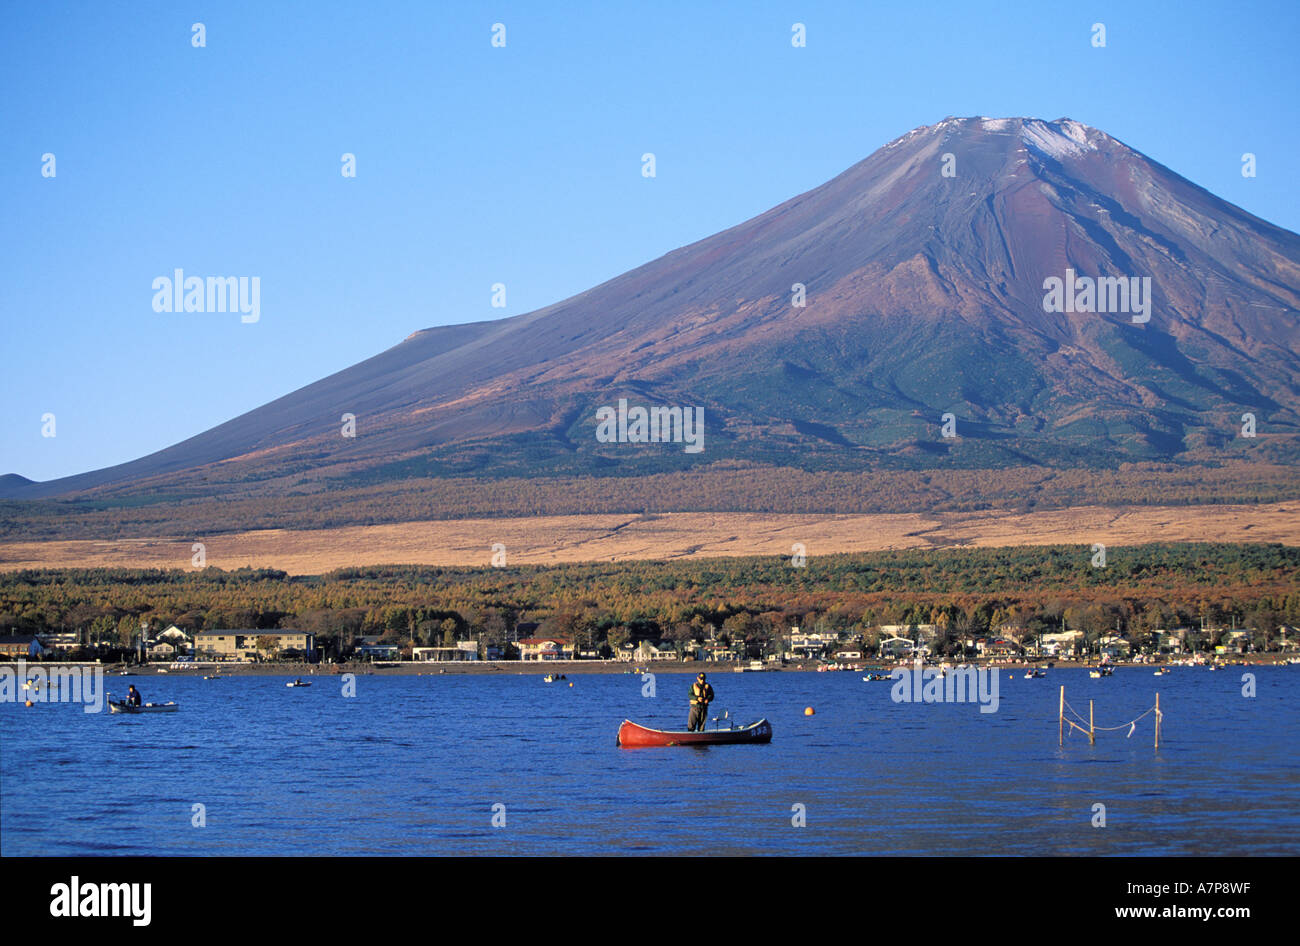 Japan, Honshu Island, Chubu region, Mount Fuji (12, 389 ft) in front of Lake Yamanakako Stock Photo